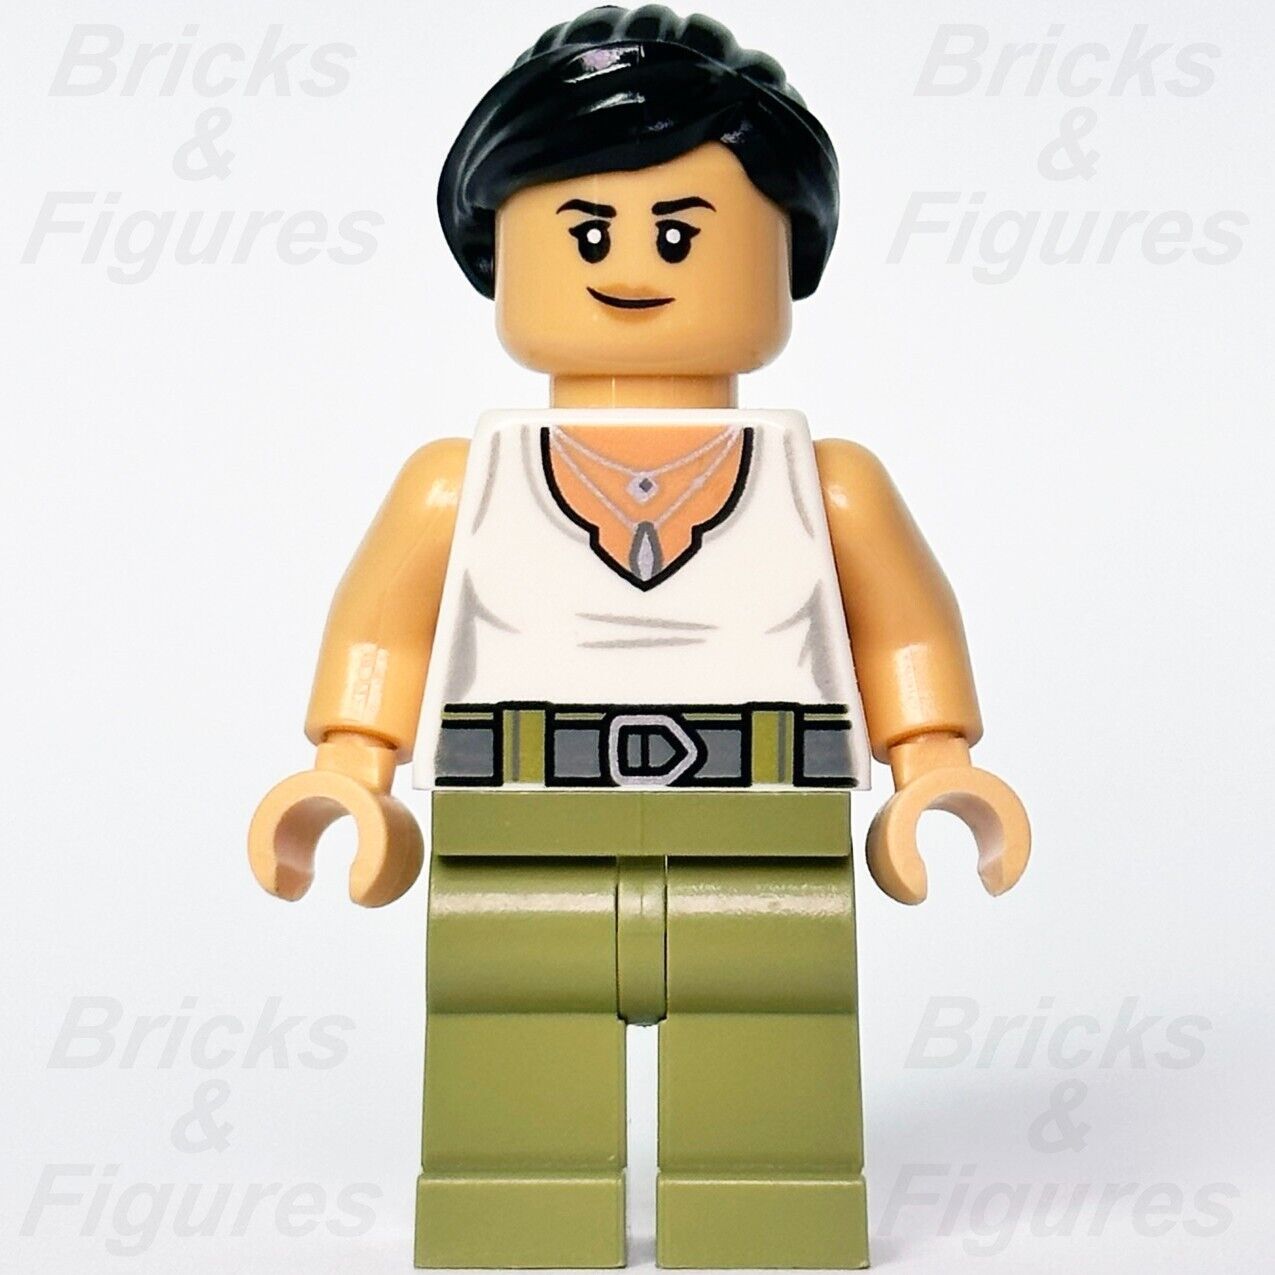 LEGO Avatar Trudy Chacon Minifigure RDA Samson Pilot 75573 avt008 Minifig New - Bricks & Figures